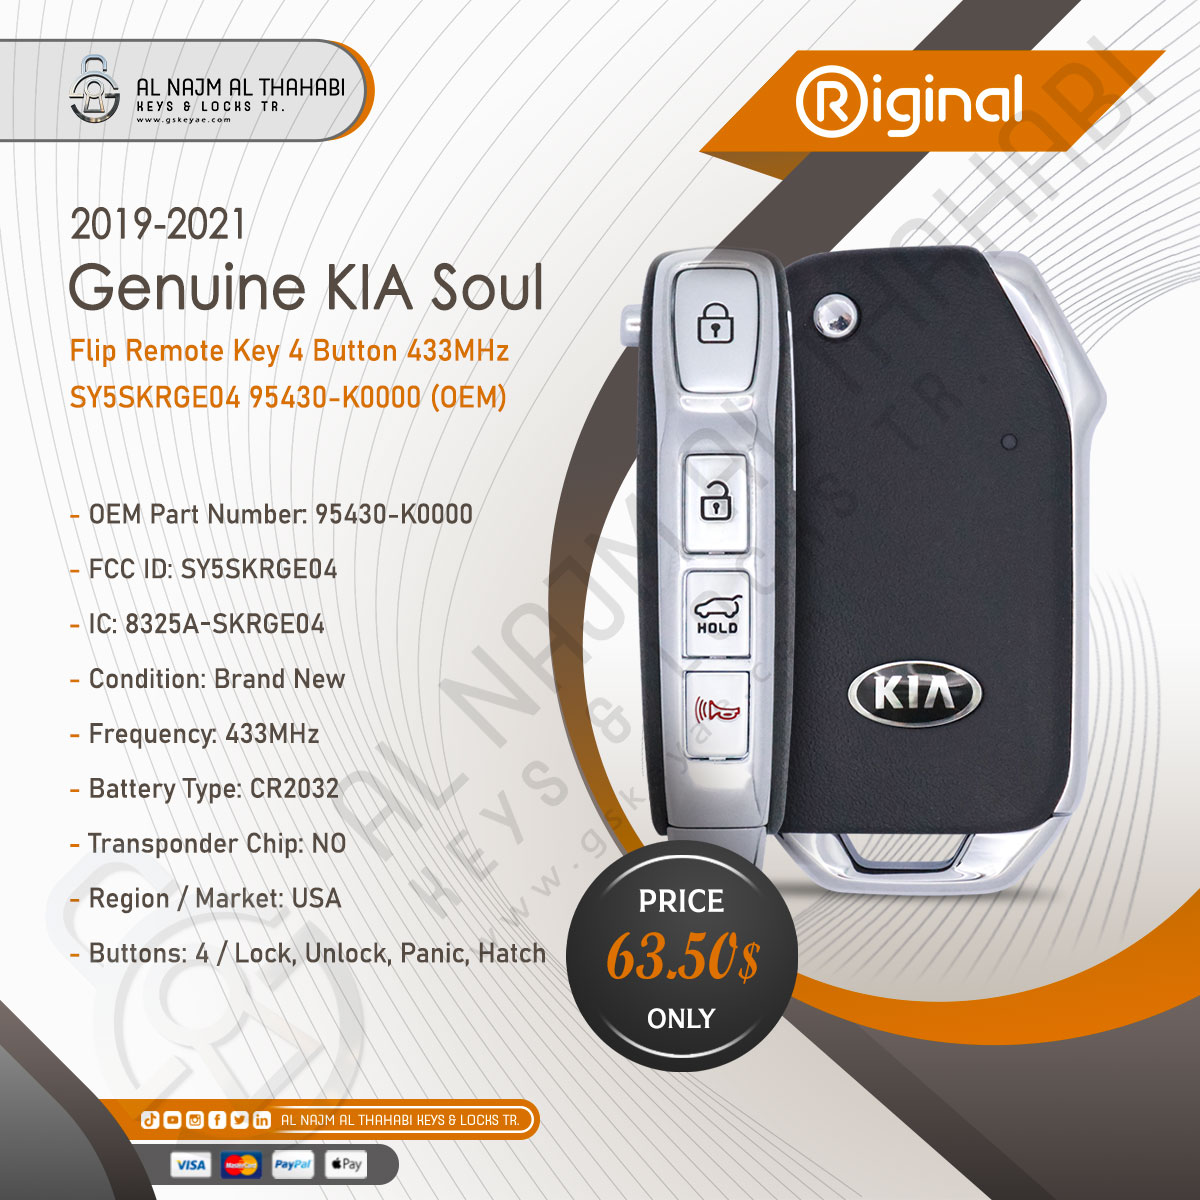 2019-2021 Genuine KIA Soul Flip Remote Key 4 Button 433MHz SY5SKRGE04 95430-K0000